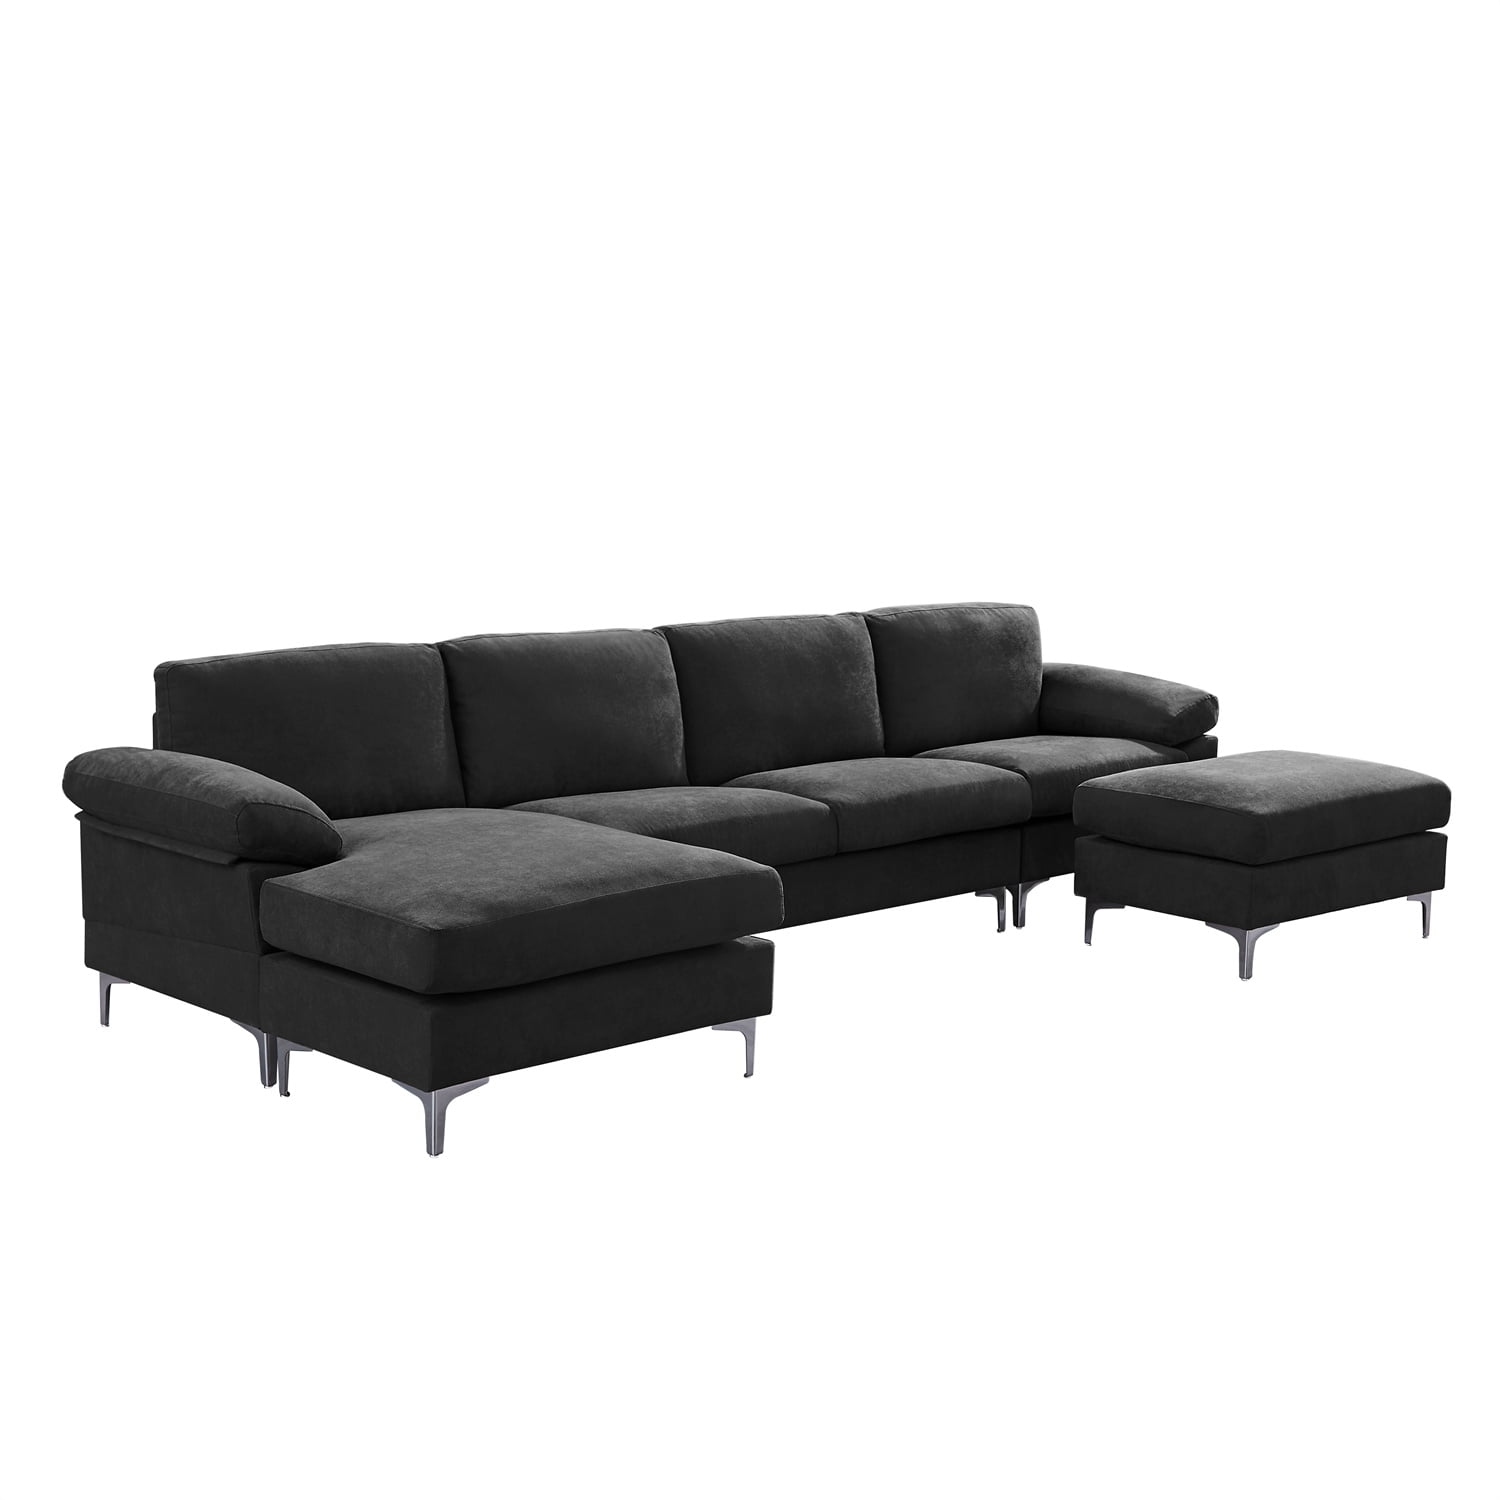 Homey Cozy 14x20 Round Zig-Zag Liner Velvet Large Sofa Couch Pillow in Black